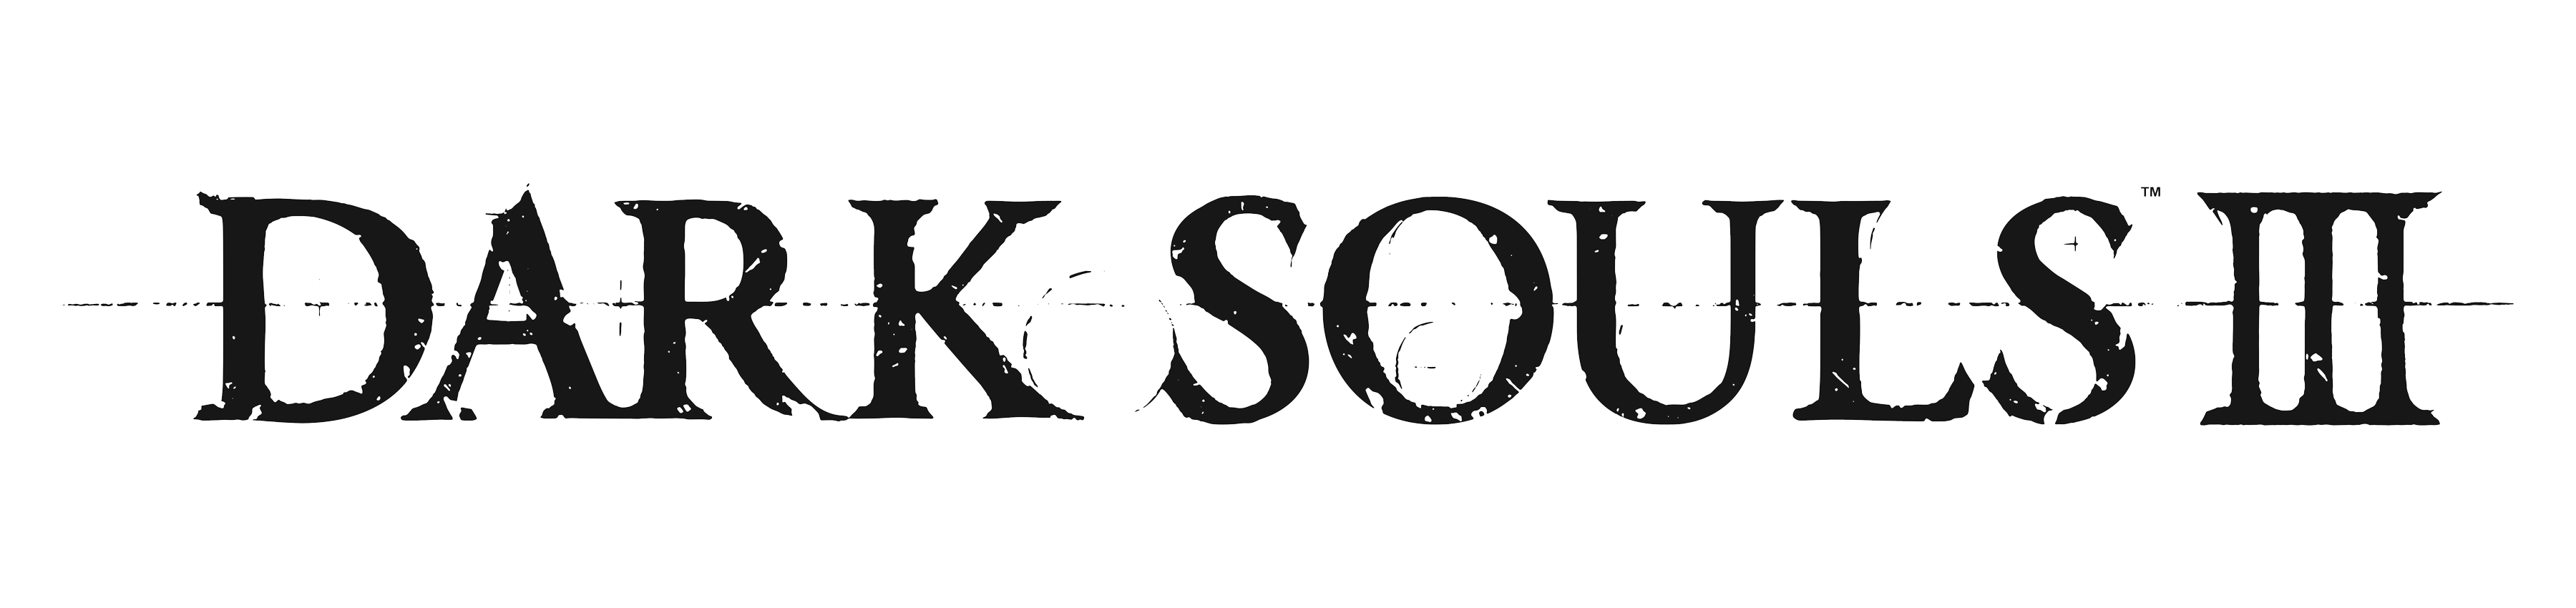 Dark Souls Logo PNG Photo Image